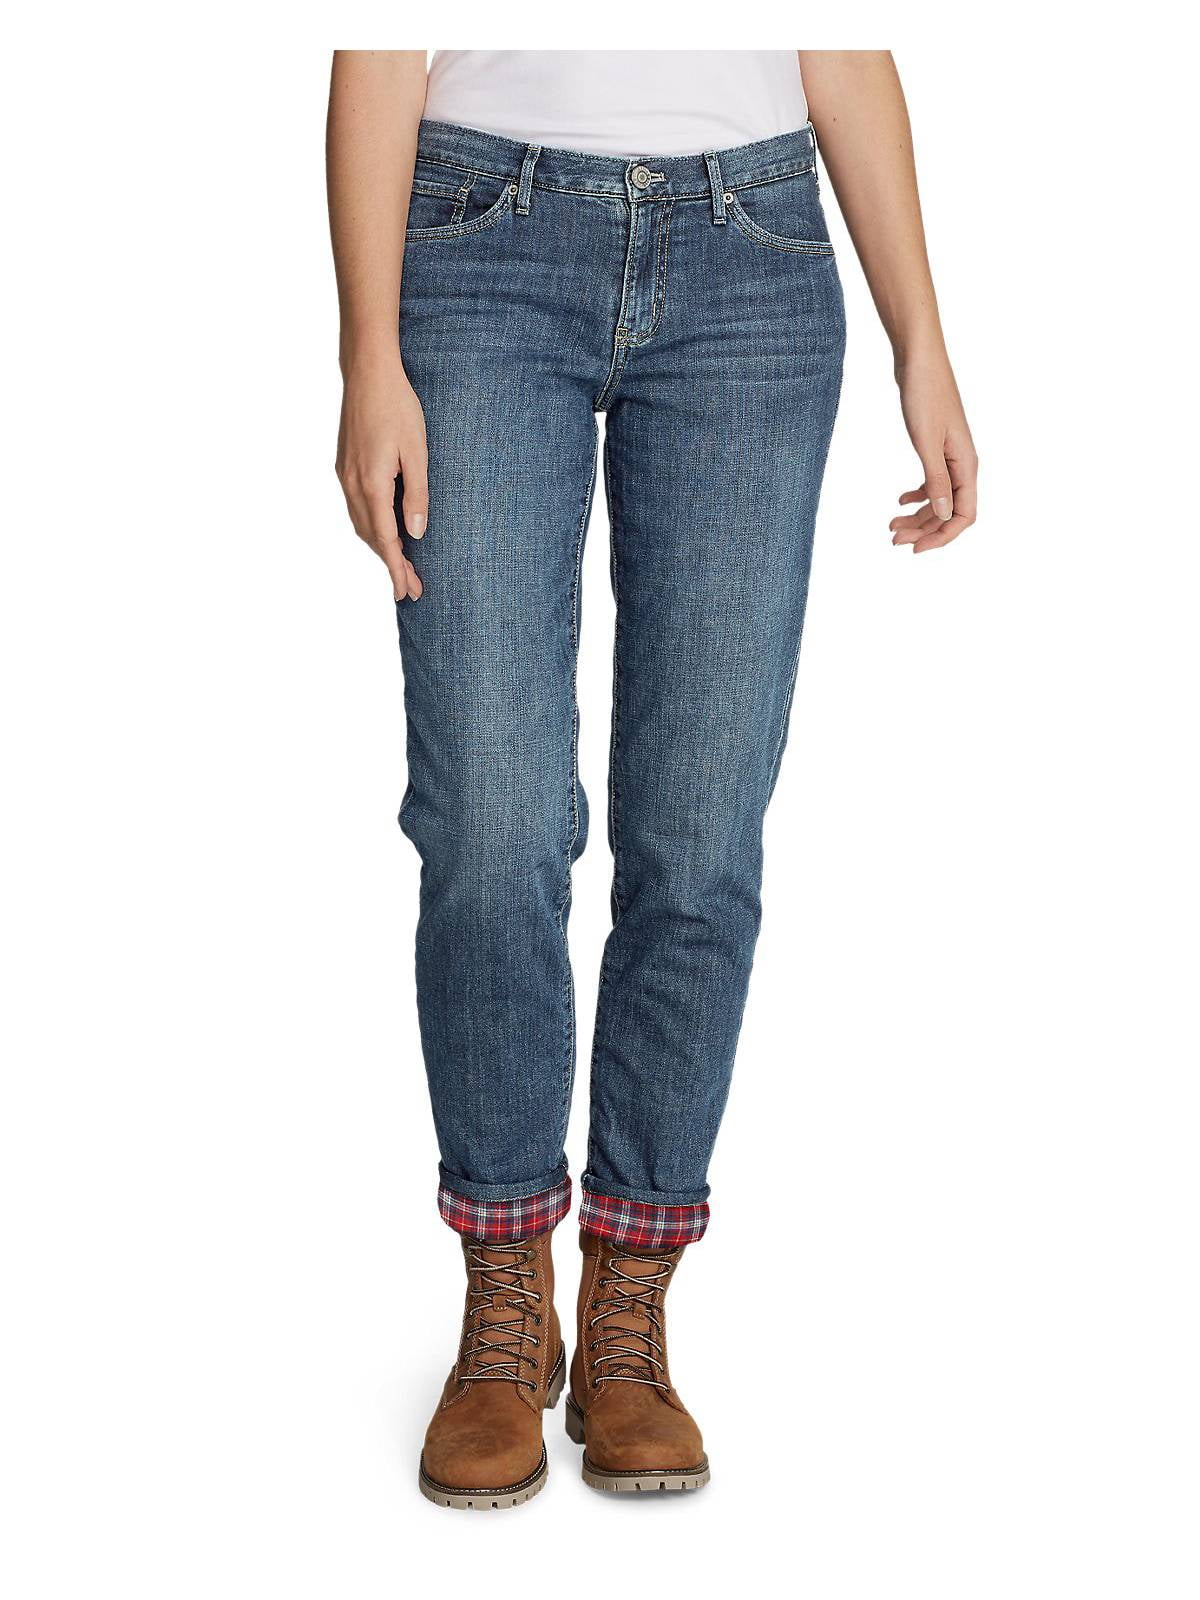 eddie bauer women's flannel lined jeans